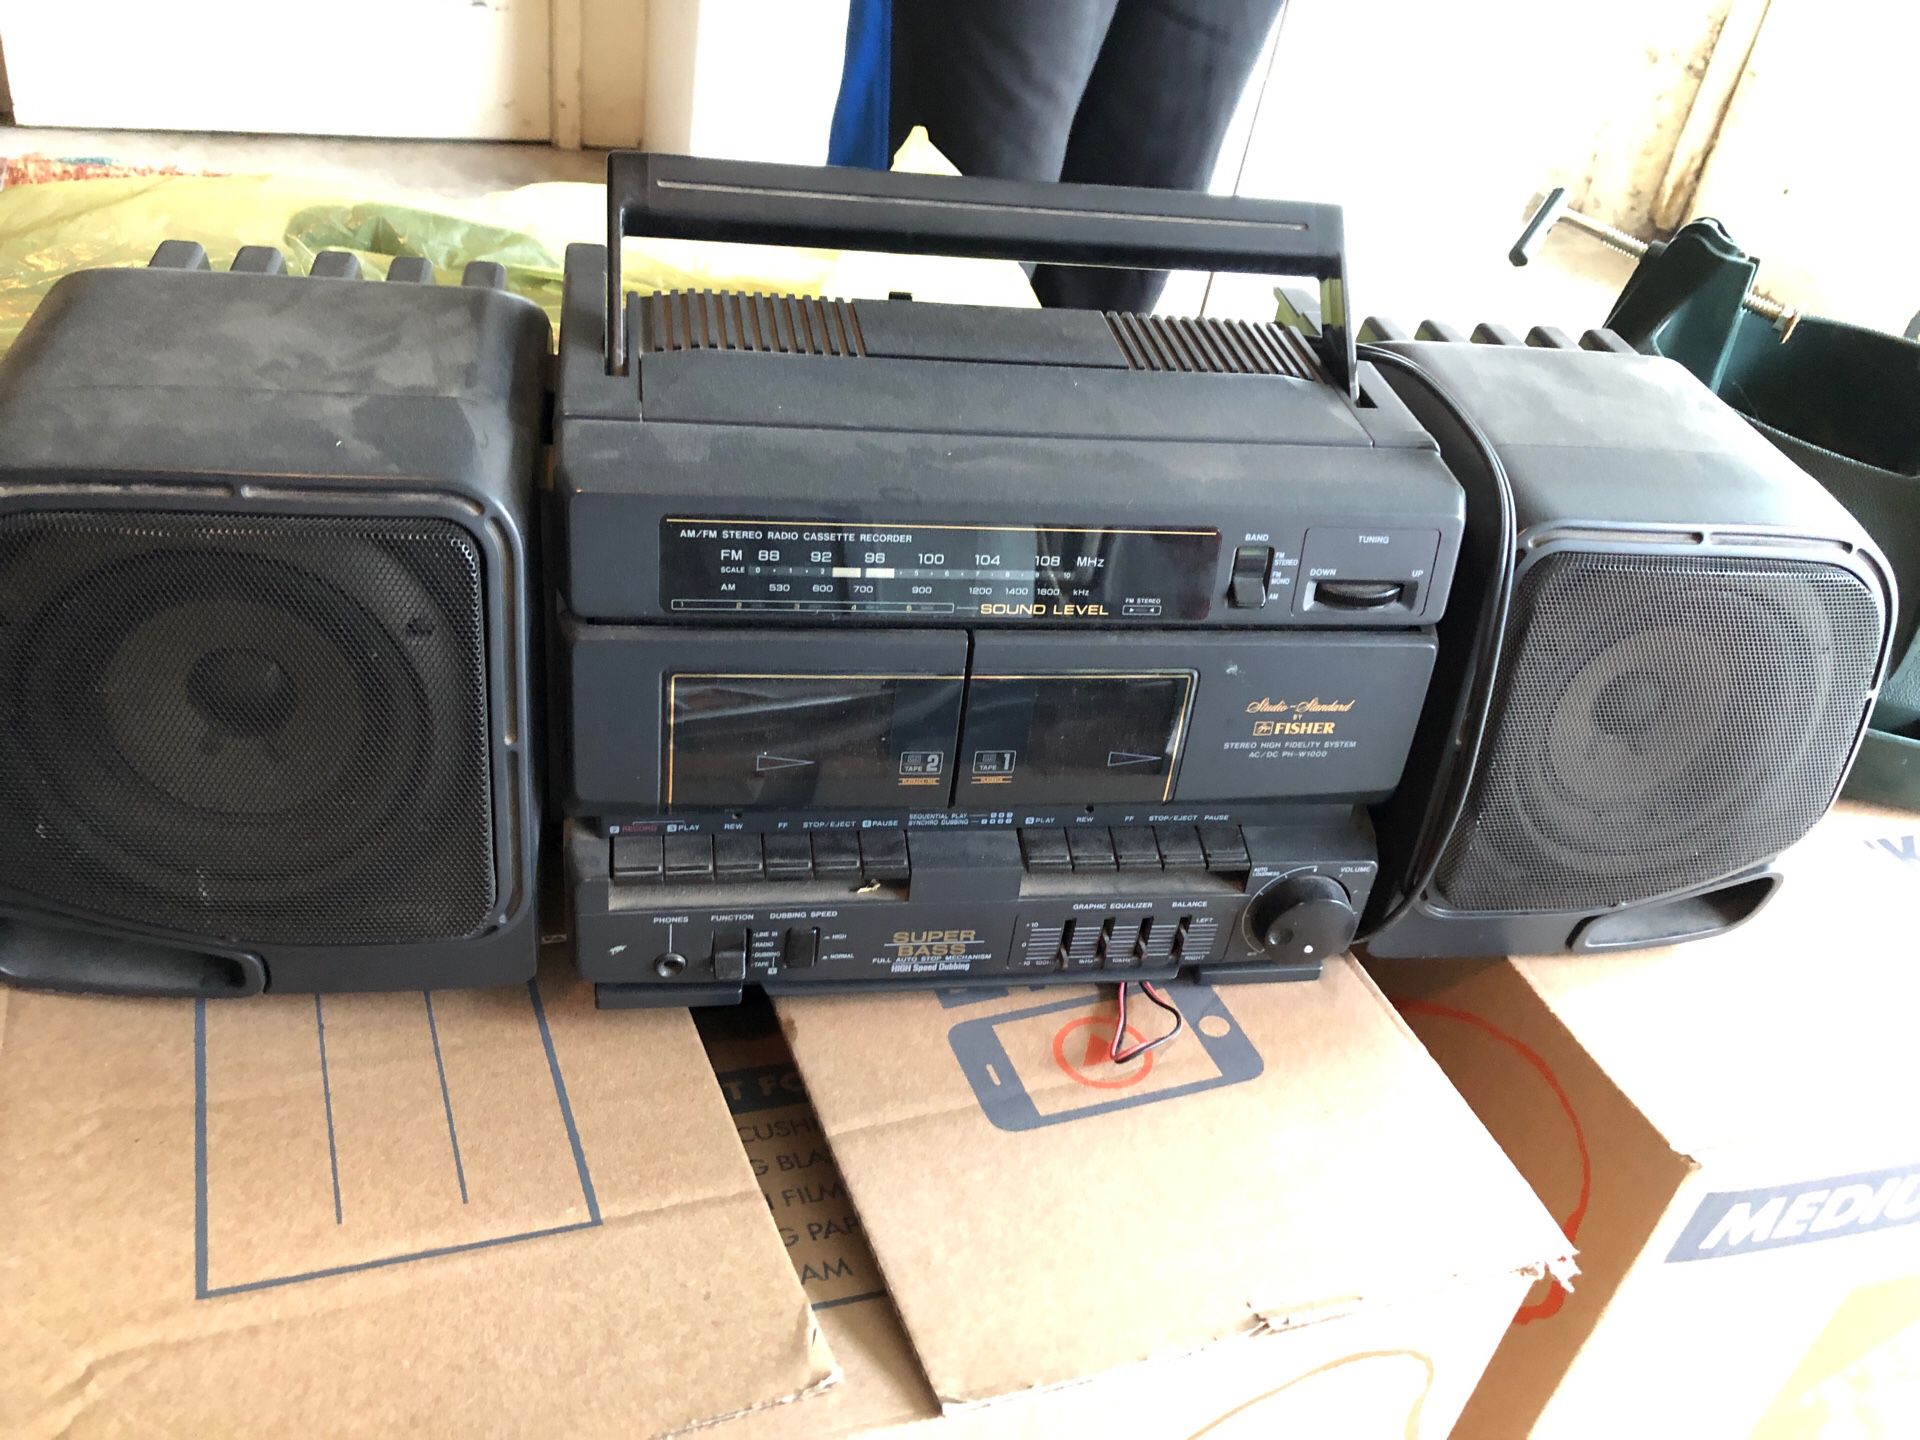 Stereo cassette and am fm radio boom box